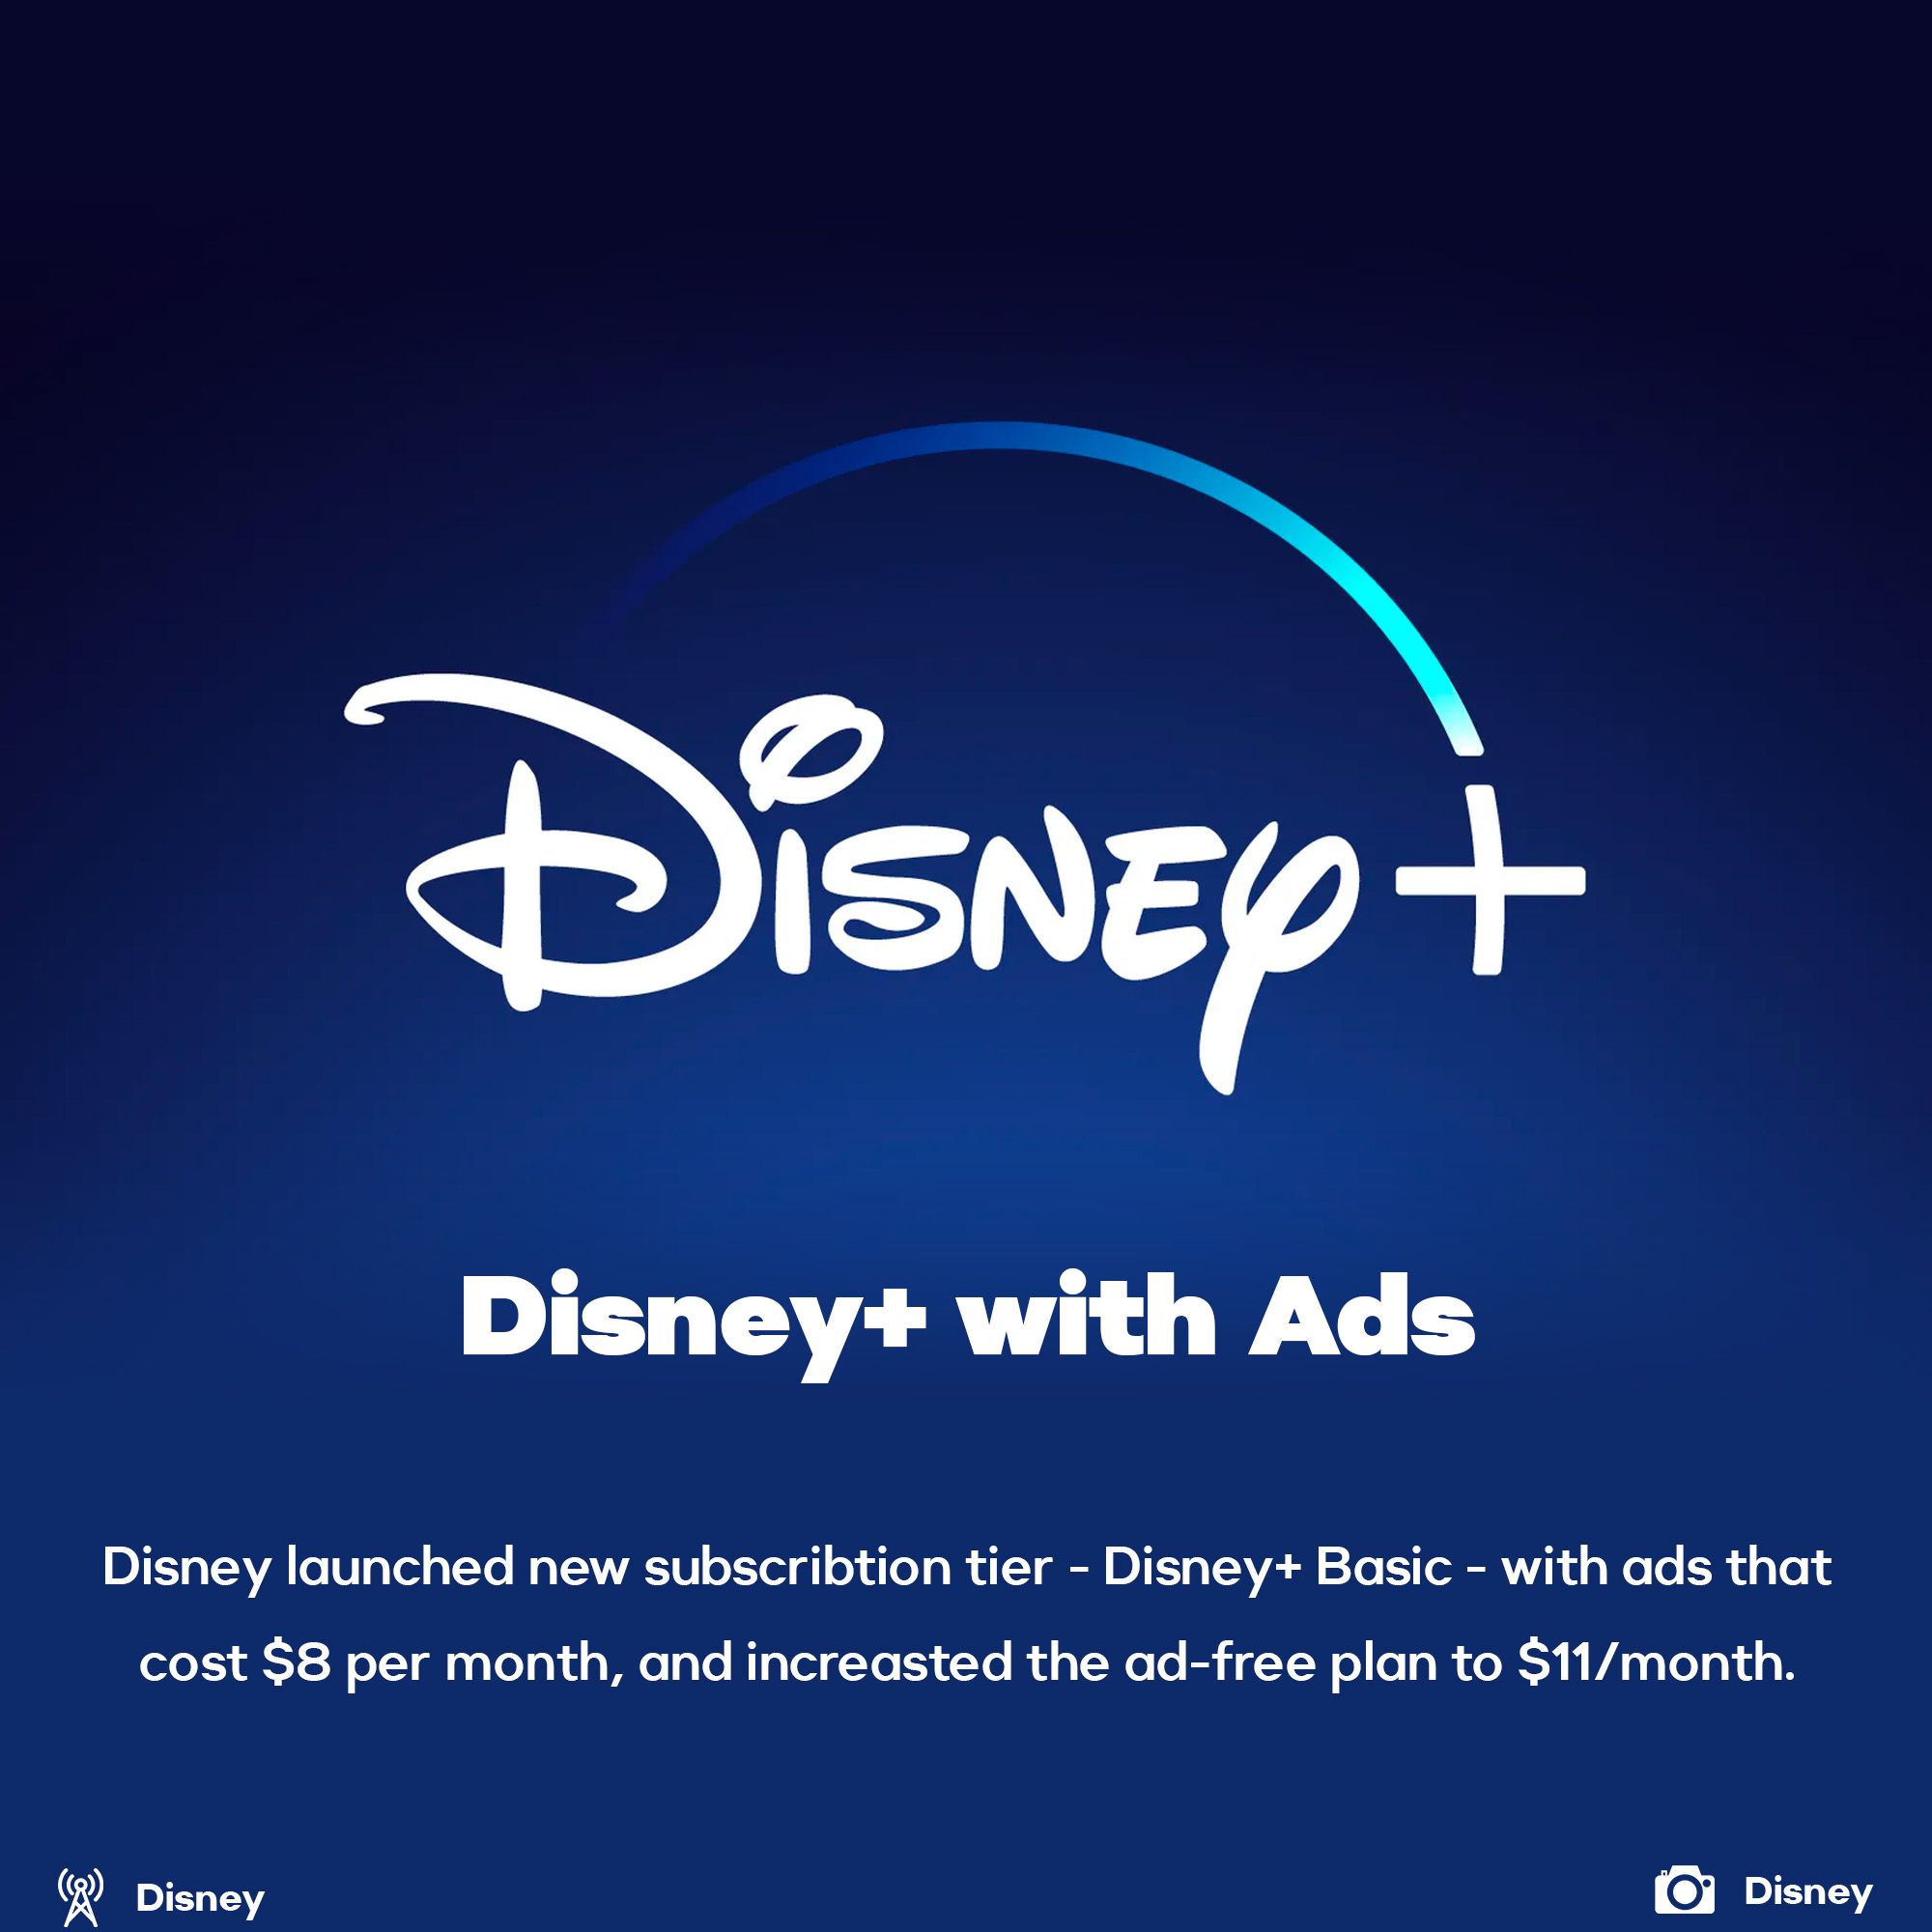 Disney+ with ads